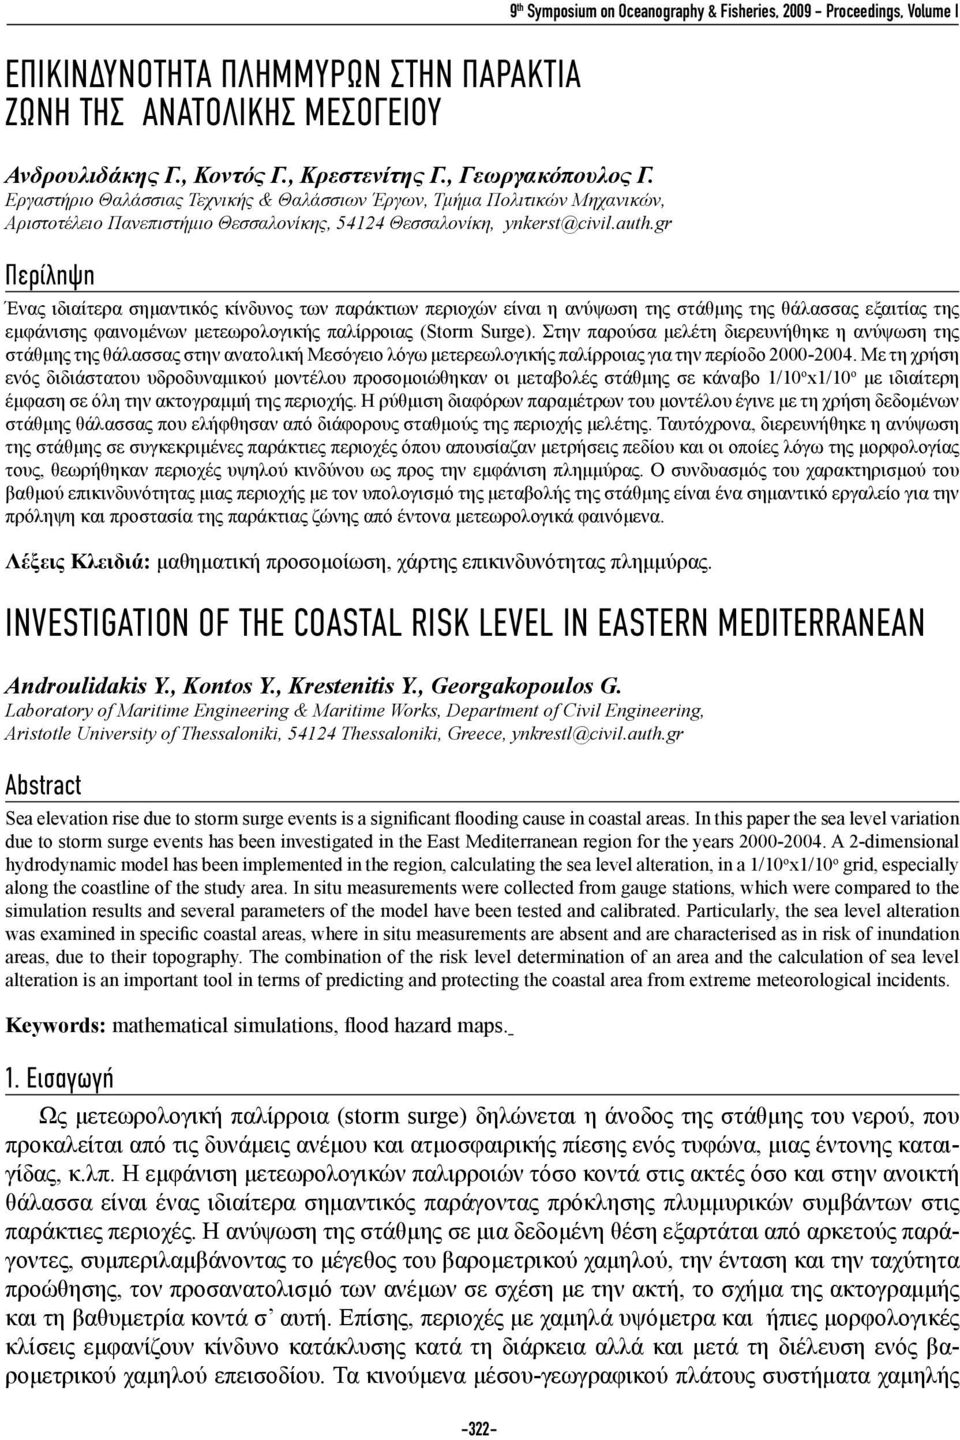 gr -322-9 th Symposium on Oceanography & Fisheries, 2009 - Proceedings, Volume Ι Περίληψη Ένας ιδιαίτερα σημαντικός κίνδυνος των παράκτιων περιοχών είναι η ανύψωση της στάθμης της θάλασσας εξαιτίας